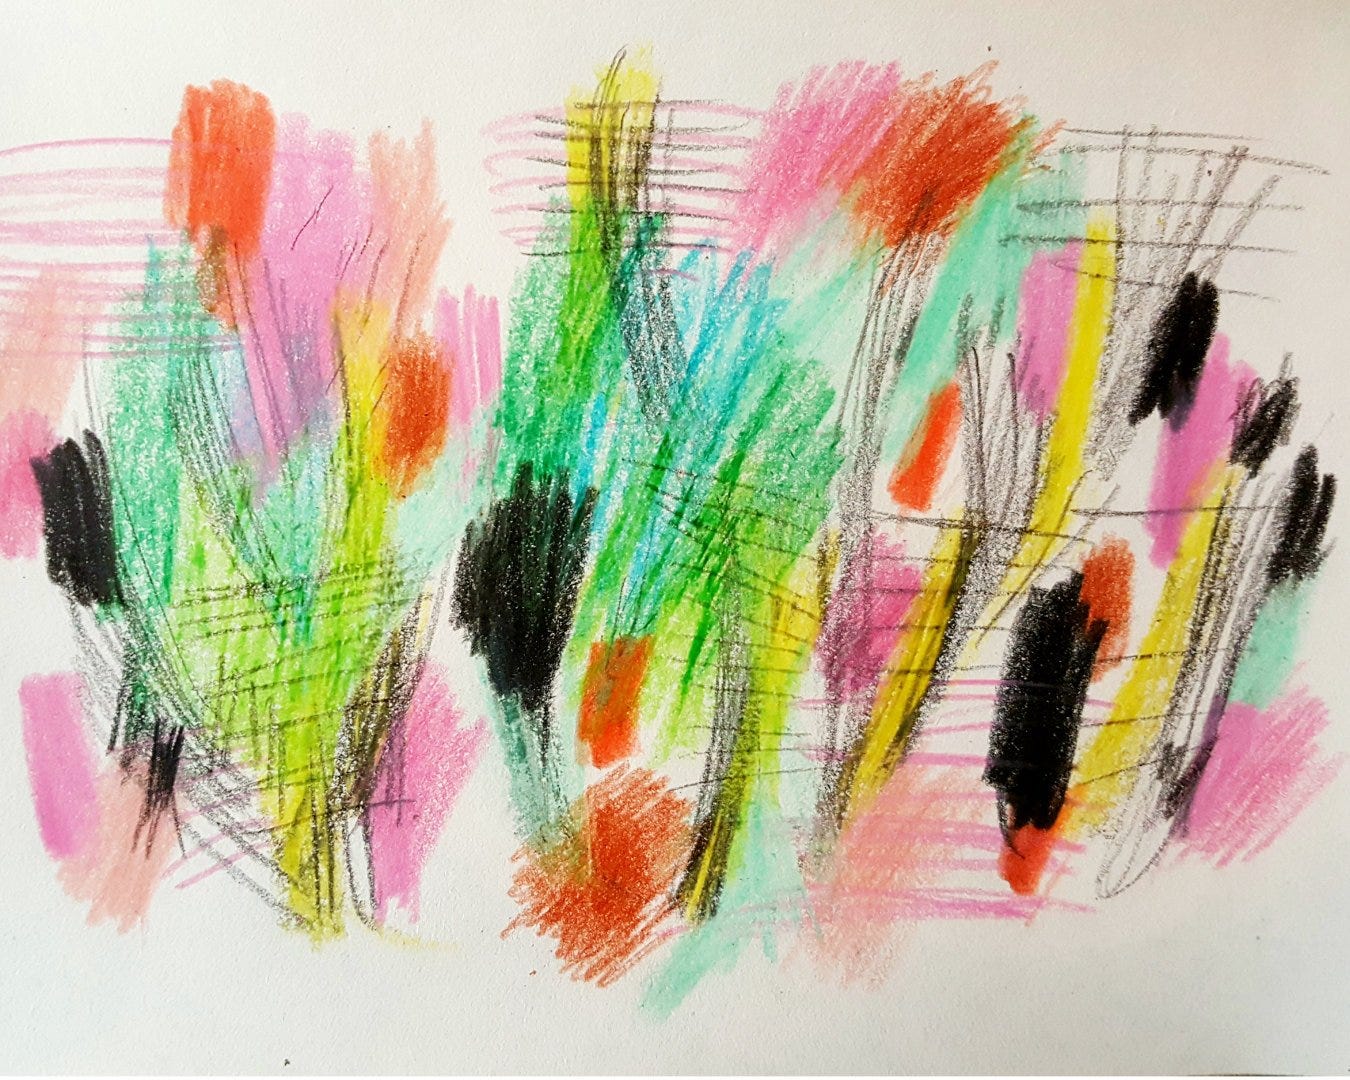 crayon doodles in sketchbook by Julia Laing